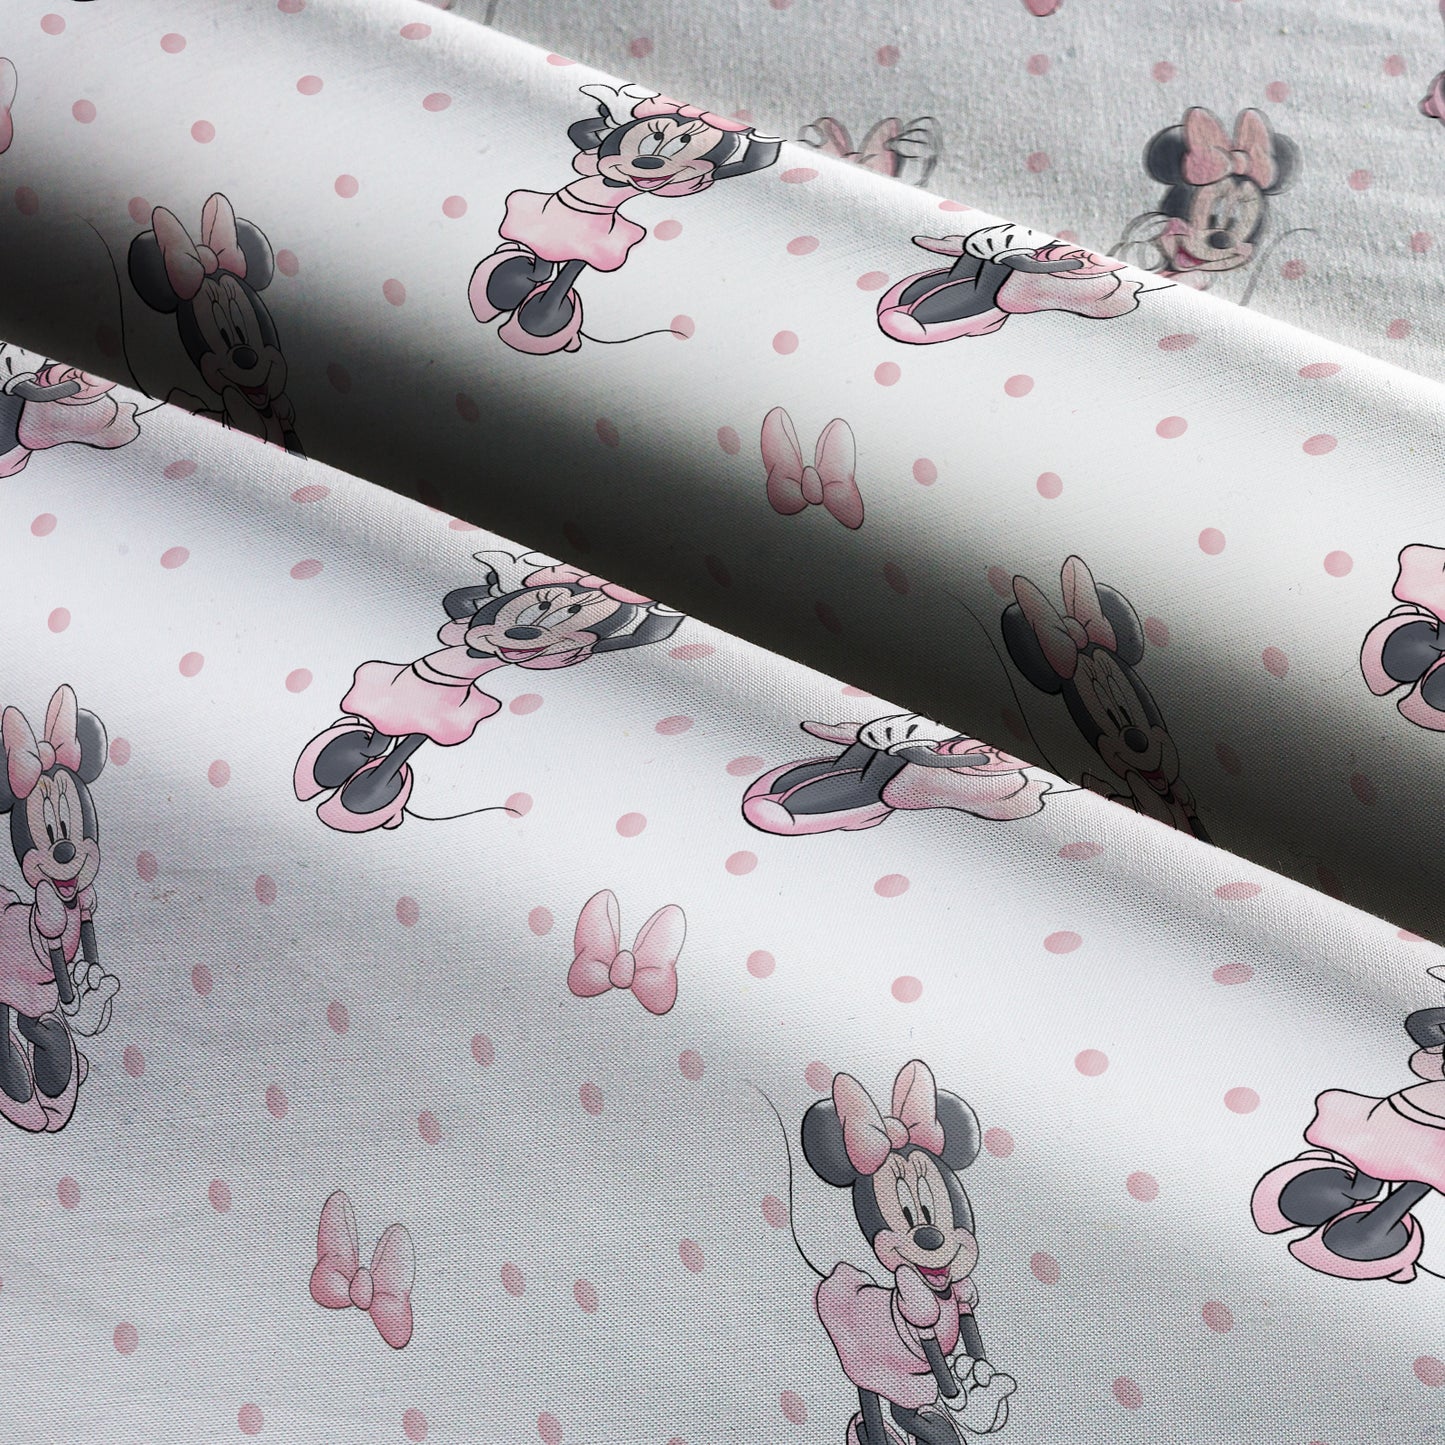 Disney Minnie Mouse Bows & Polka Dots Cotton Fabric